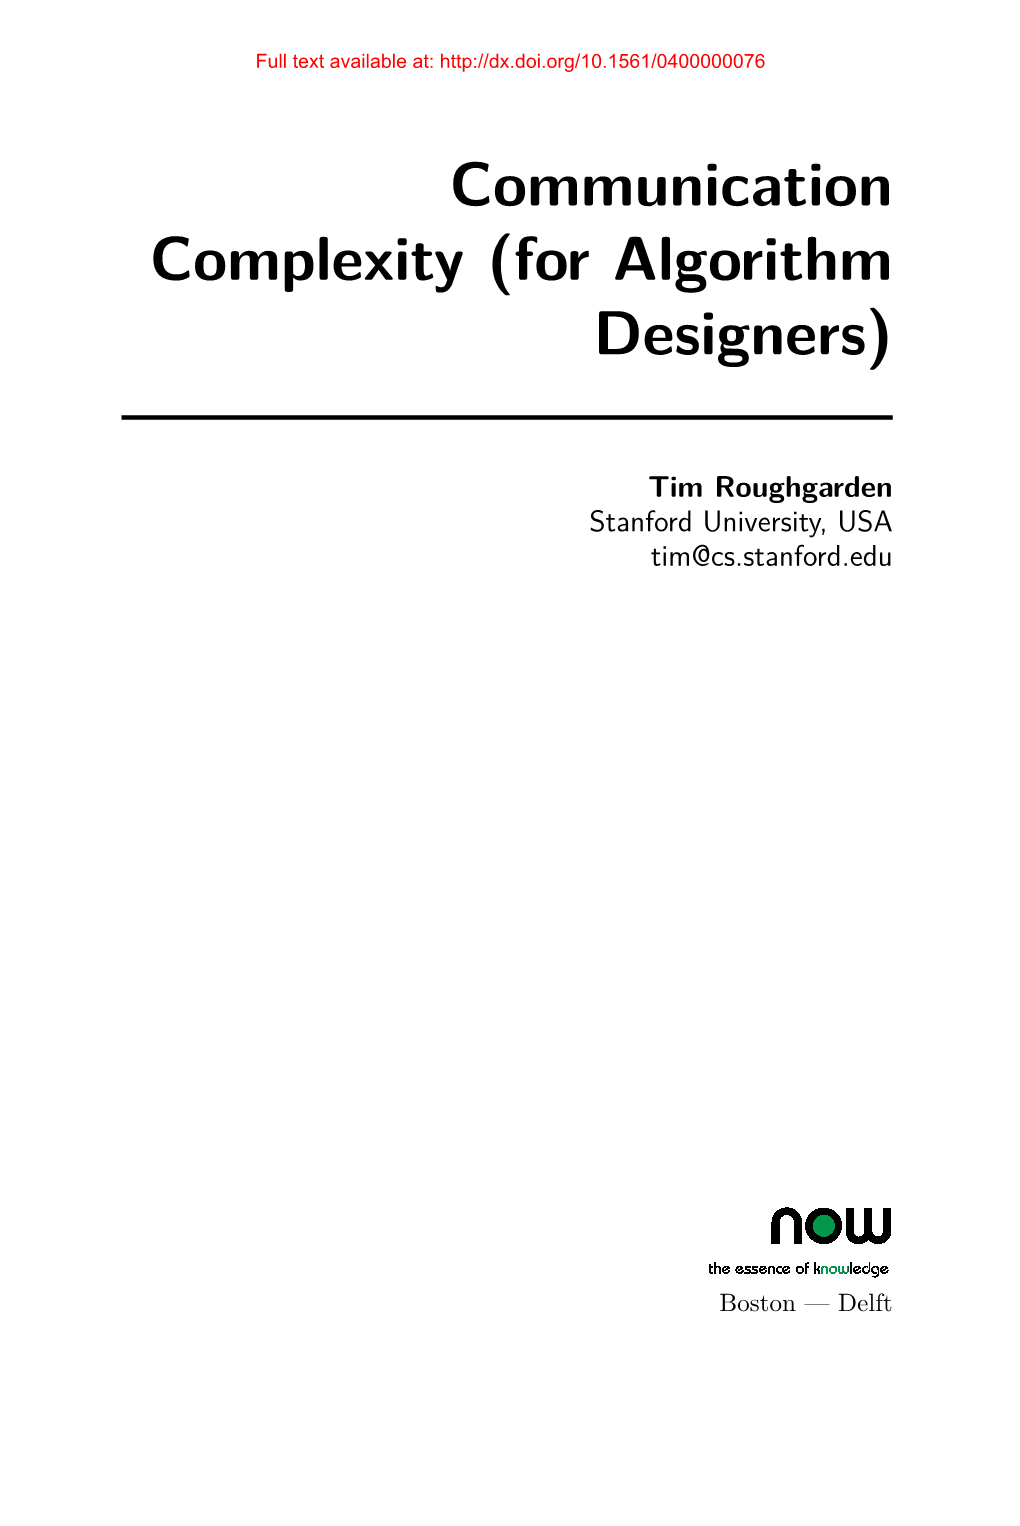 Communication Complexity (For Algorithm Designers)